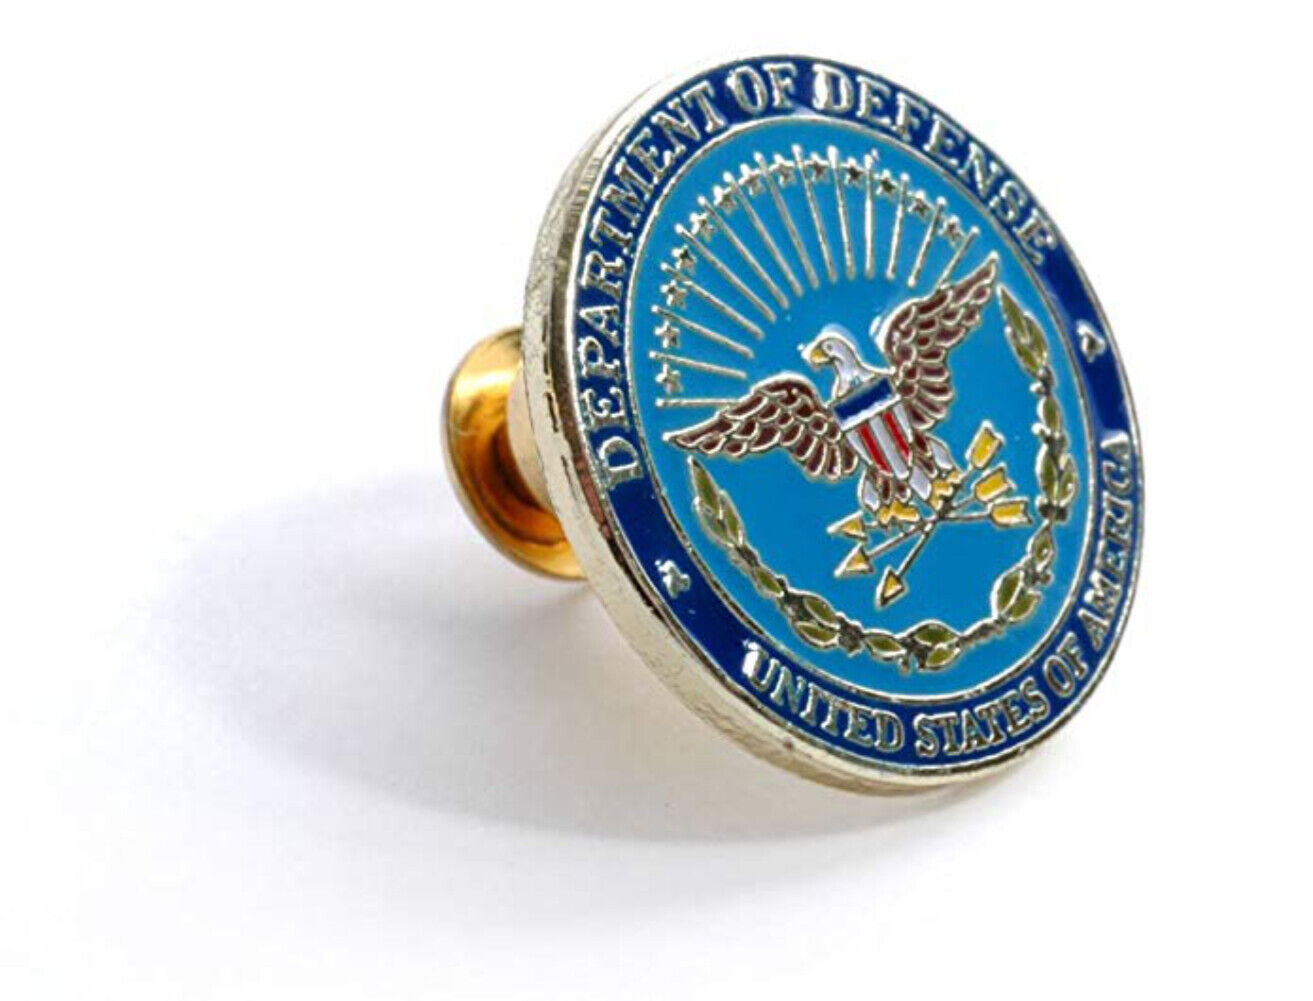 NEW Department of Defense Lapel Pin.